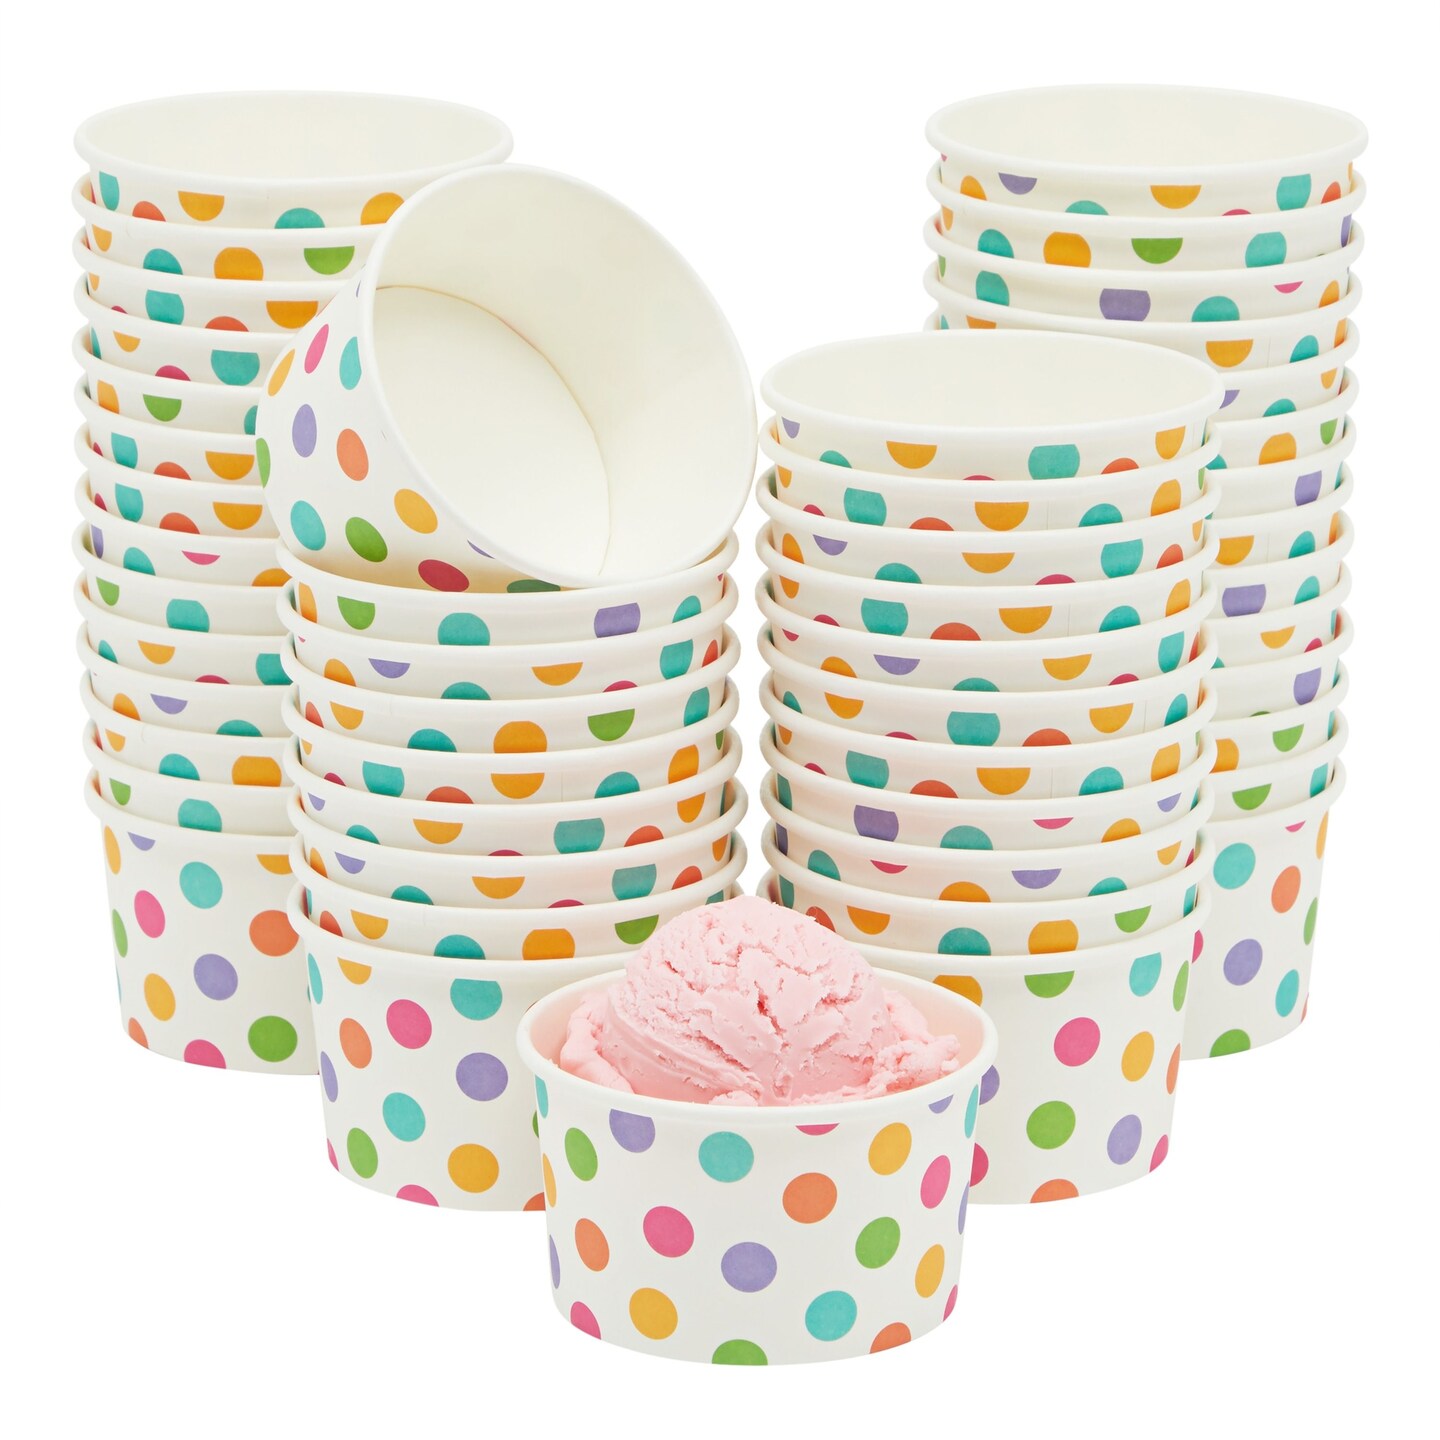 50 Pack Rainbow Polka Dot Paper Ice Cream Cups, Dessert Bowls for Sundae Bar, Frozen Yogurt (8 oz)